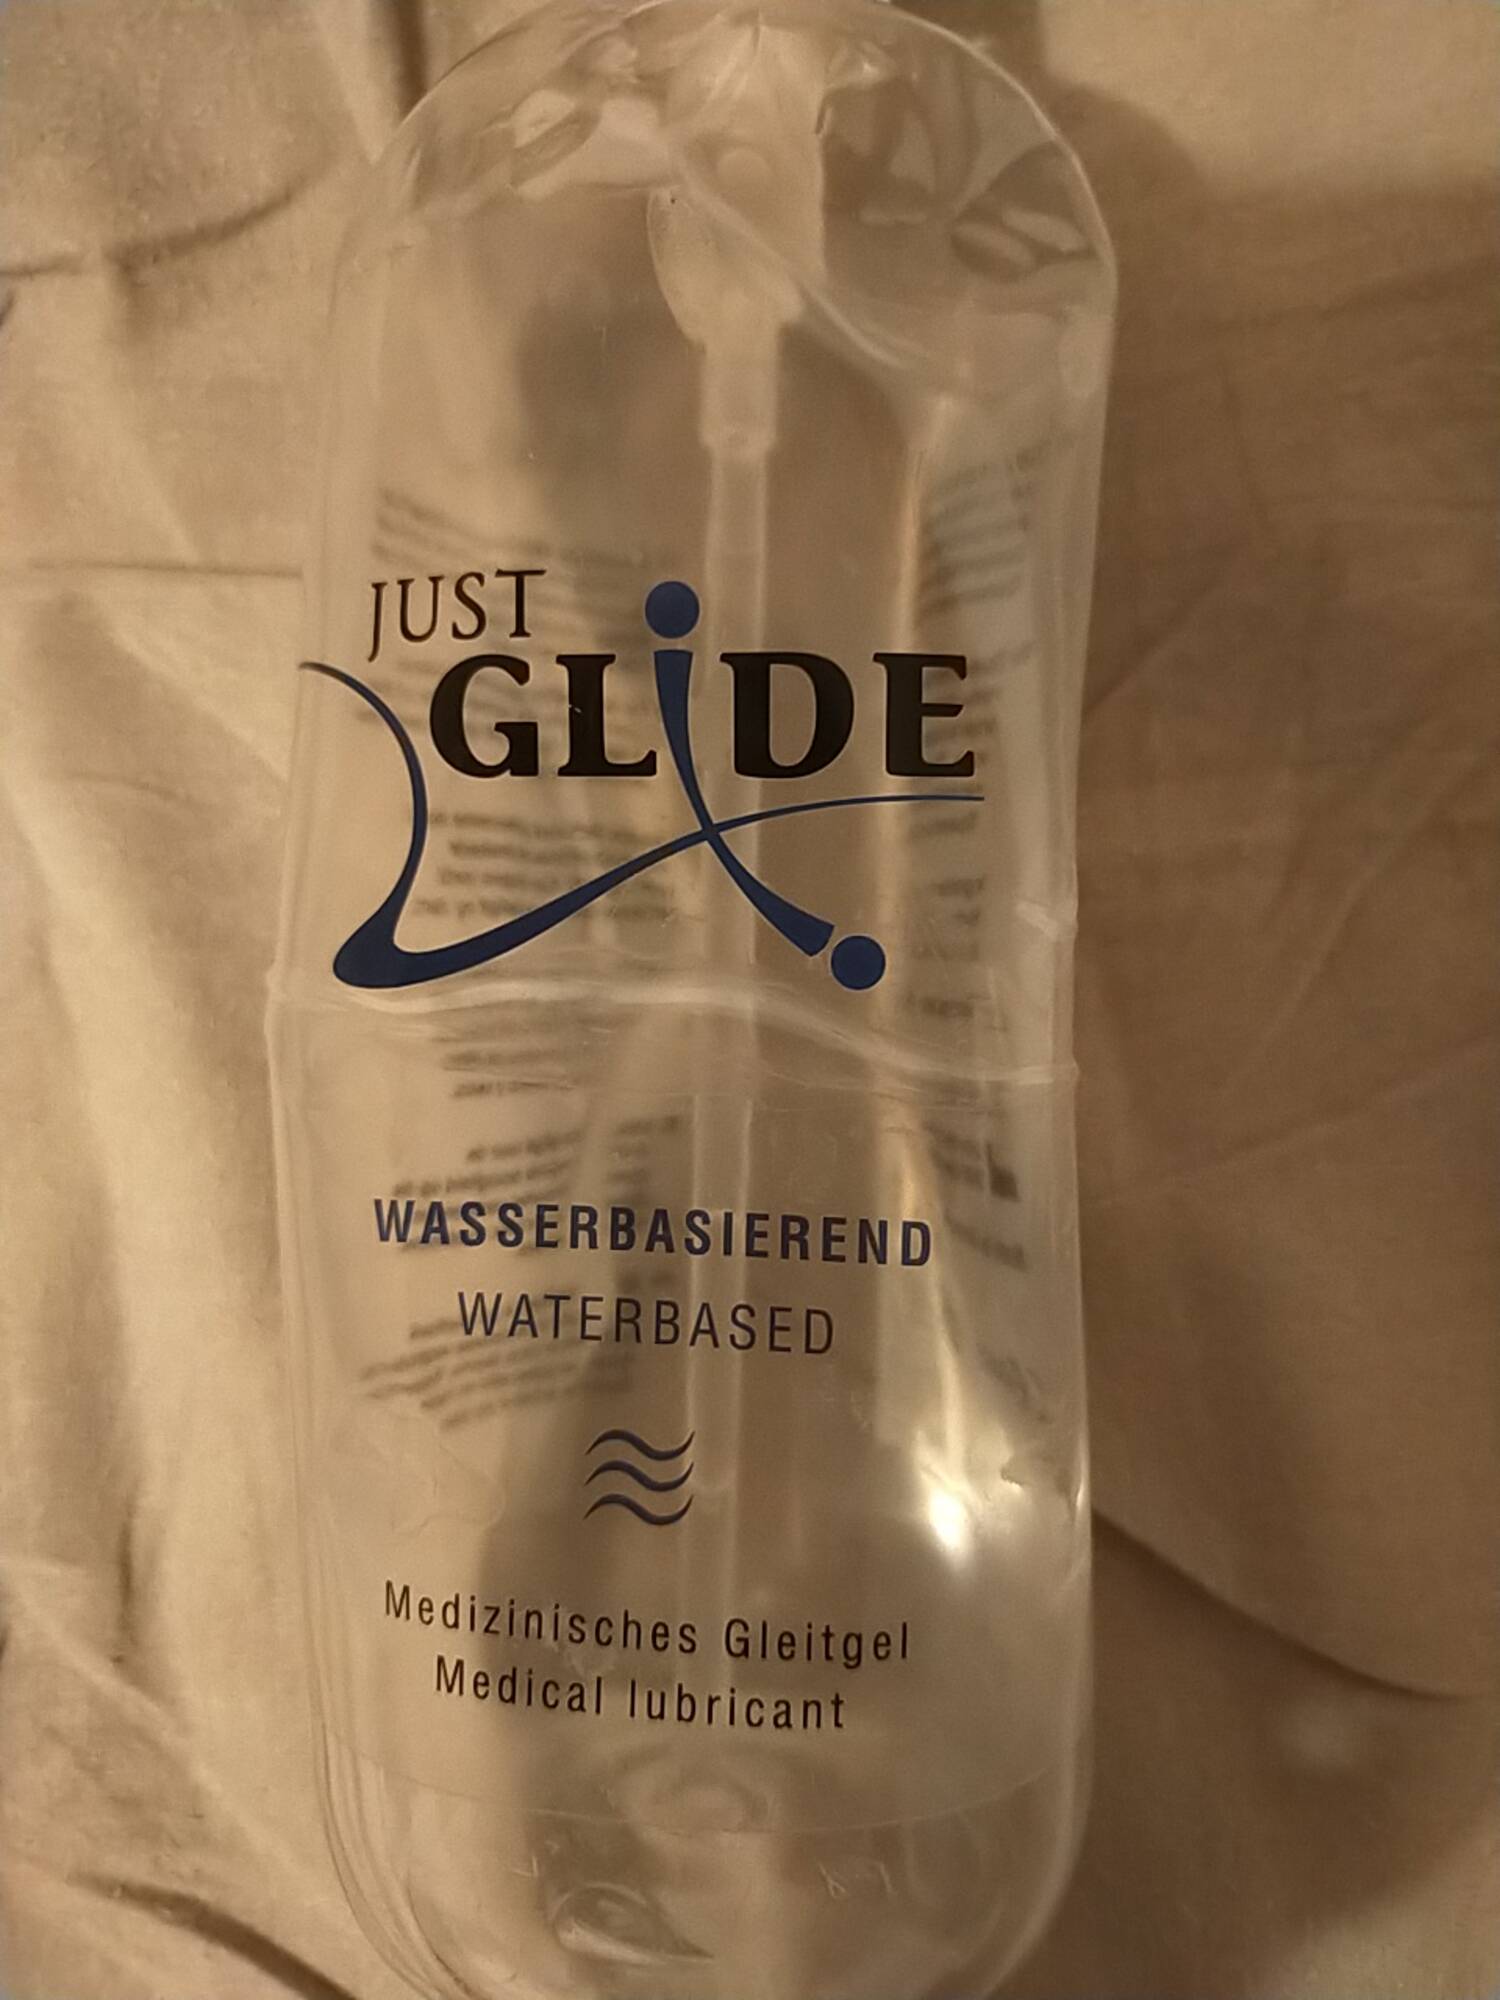 JUST GLIDE - Waterbased